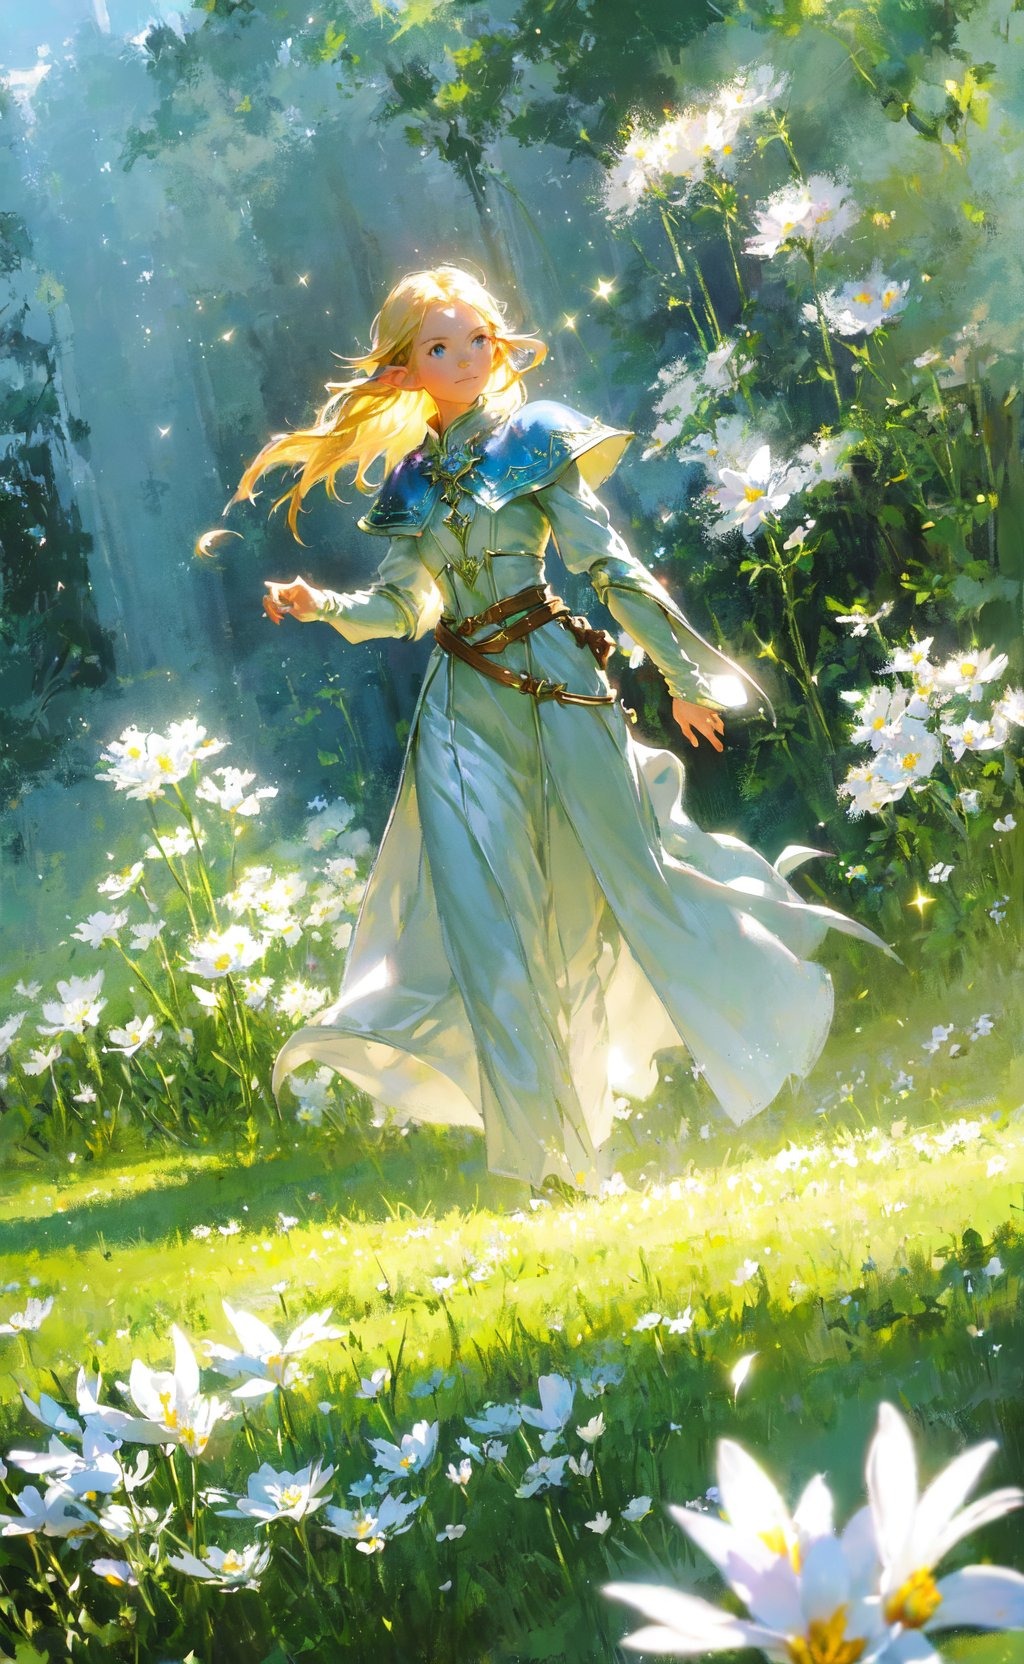 masterpiece, best quality, 1girl, elf adventurer walking through a field of white flowers, dutch angle, cinematic, volumetric lighting, sunbeam, soft lighting, mystical, magical, rim lighting, fantasy, sparkle, glittering